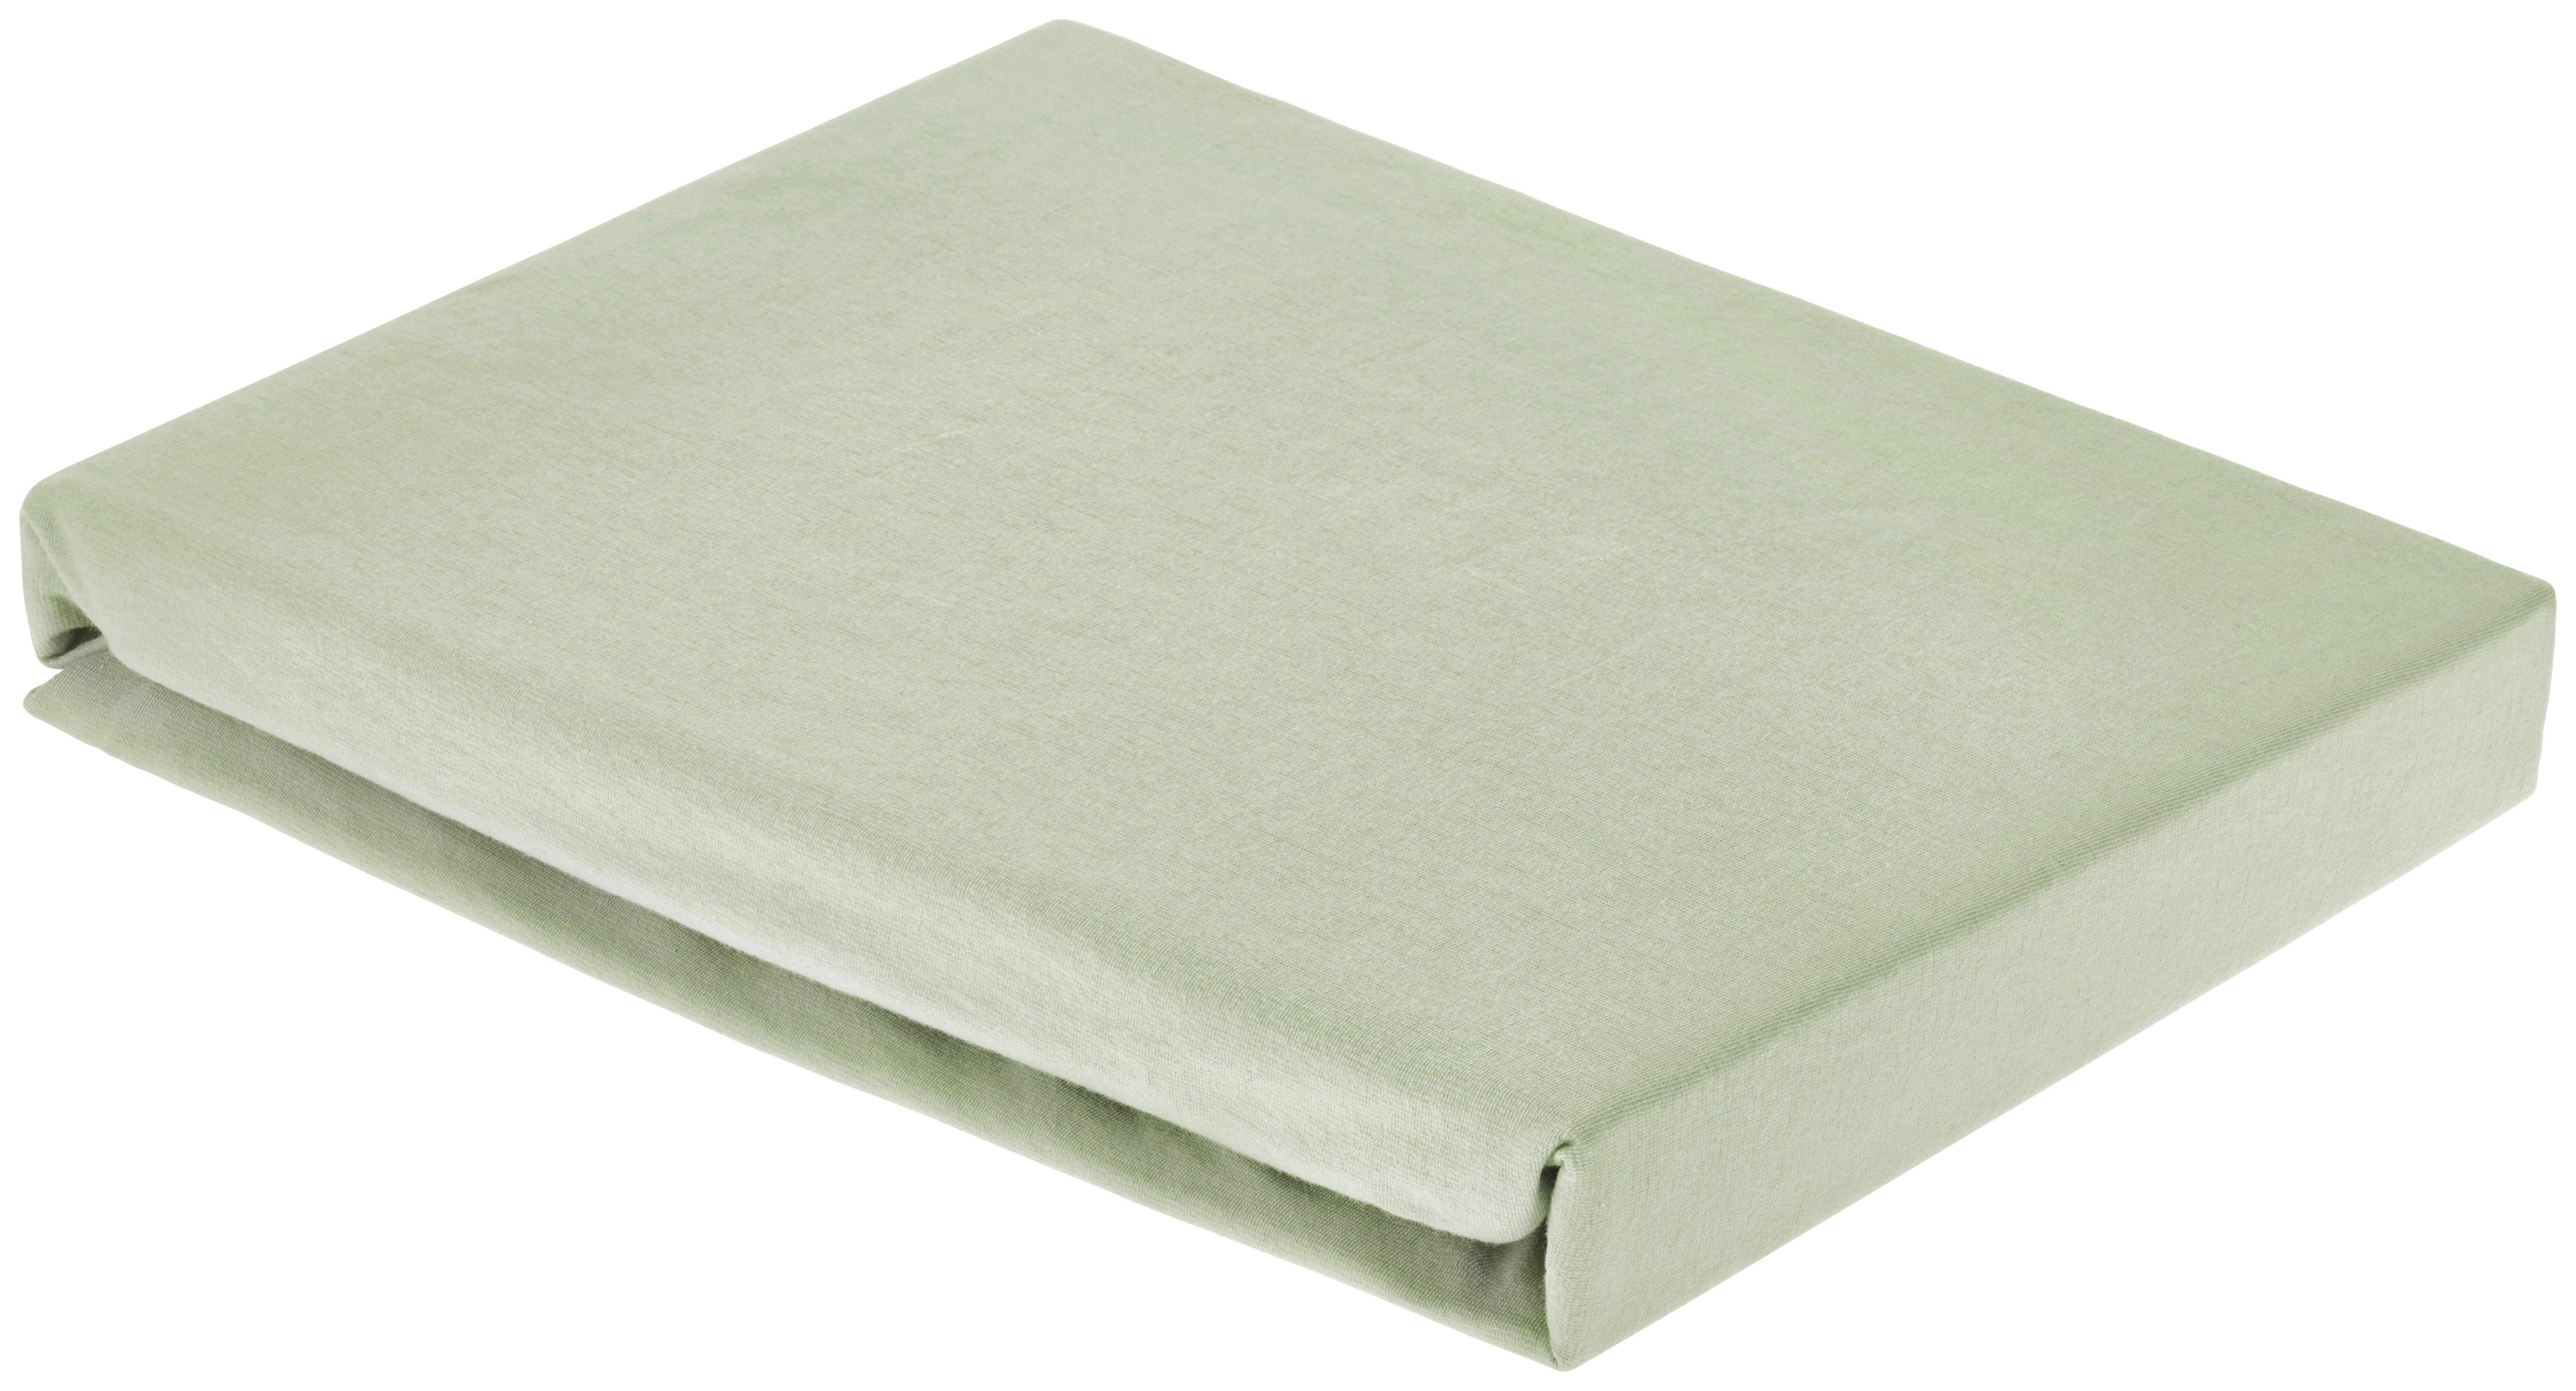 Prostěradlo Na Vrchní Matraci Elasthan Topper, 100/200cm - zelená, textil (100/200/15cm) - Premium Living